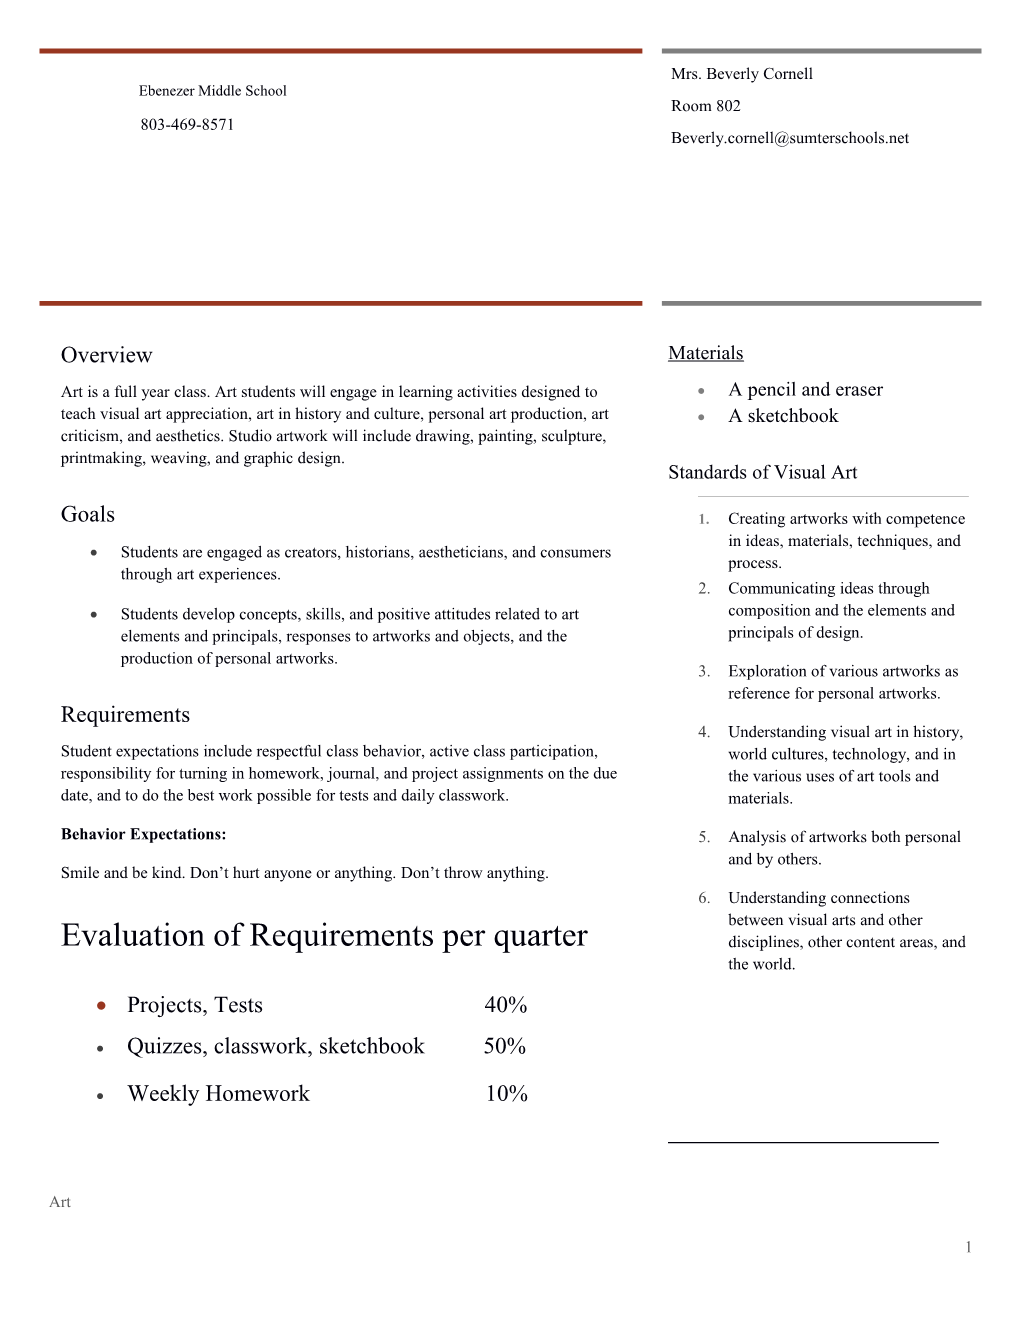 Evaluation of Requirements Per Quarter